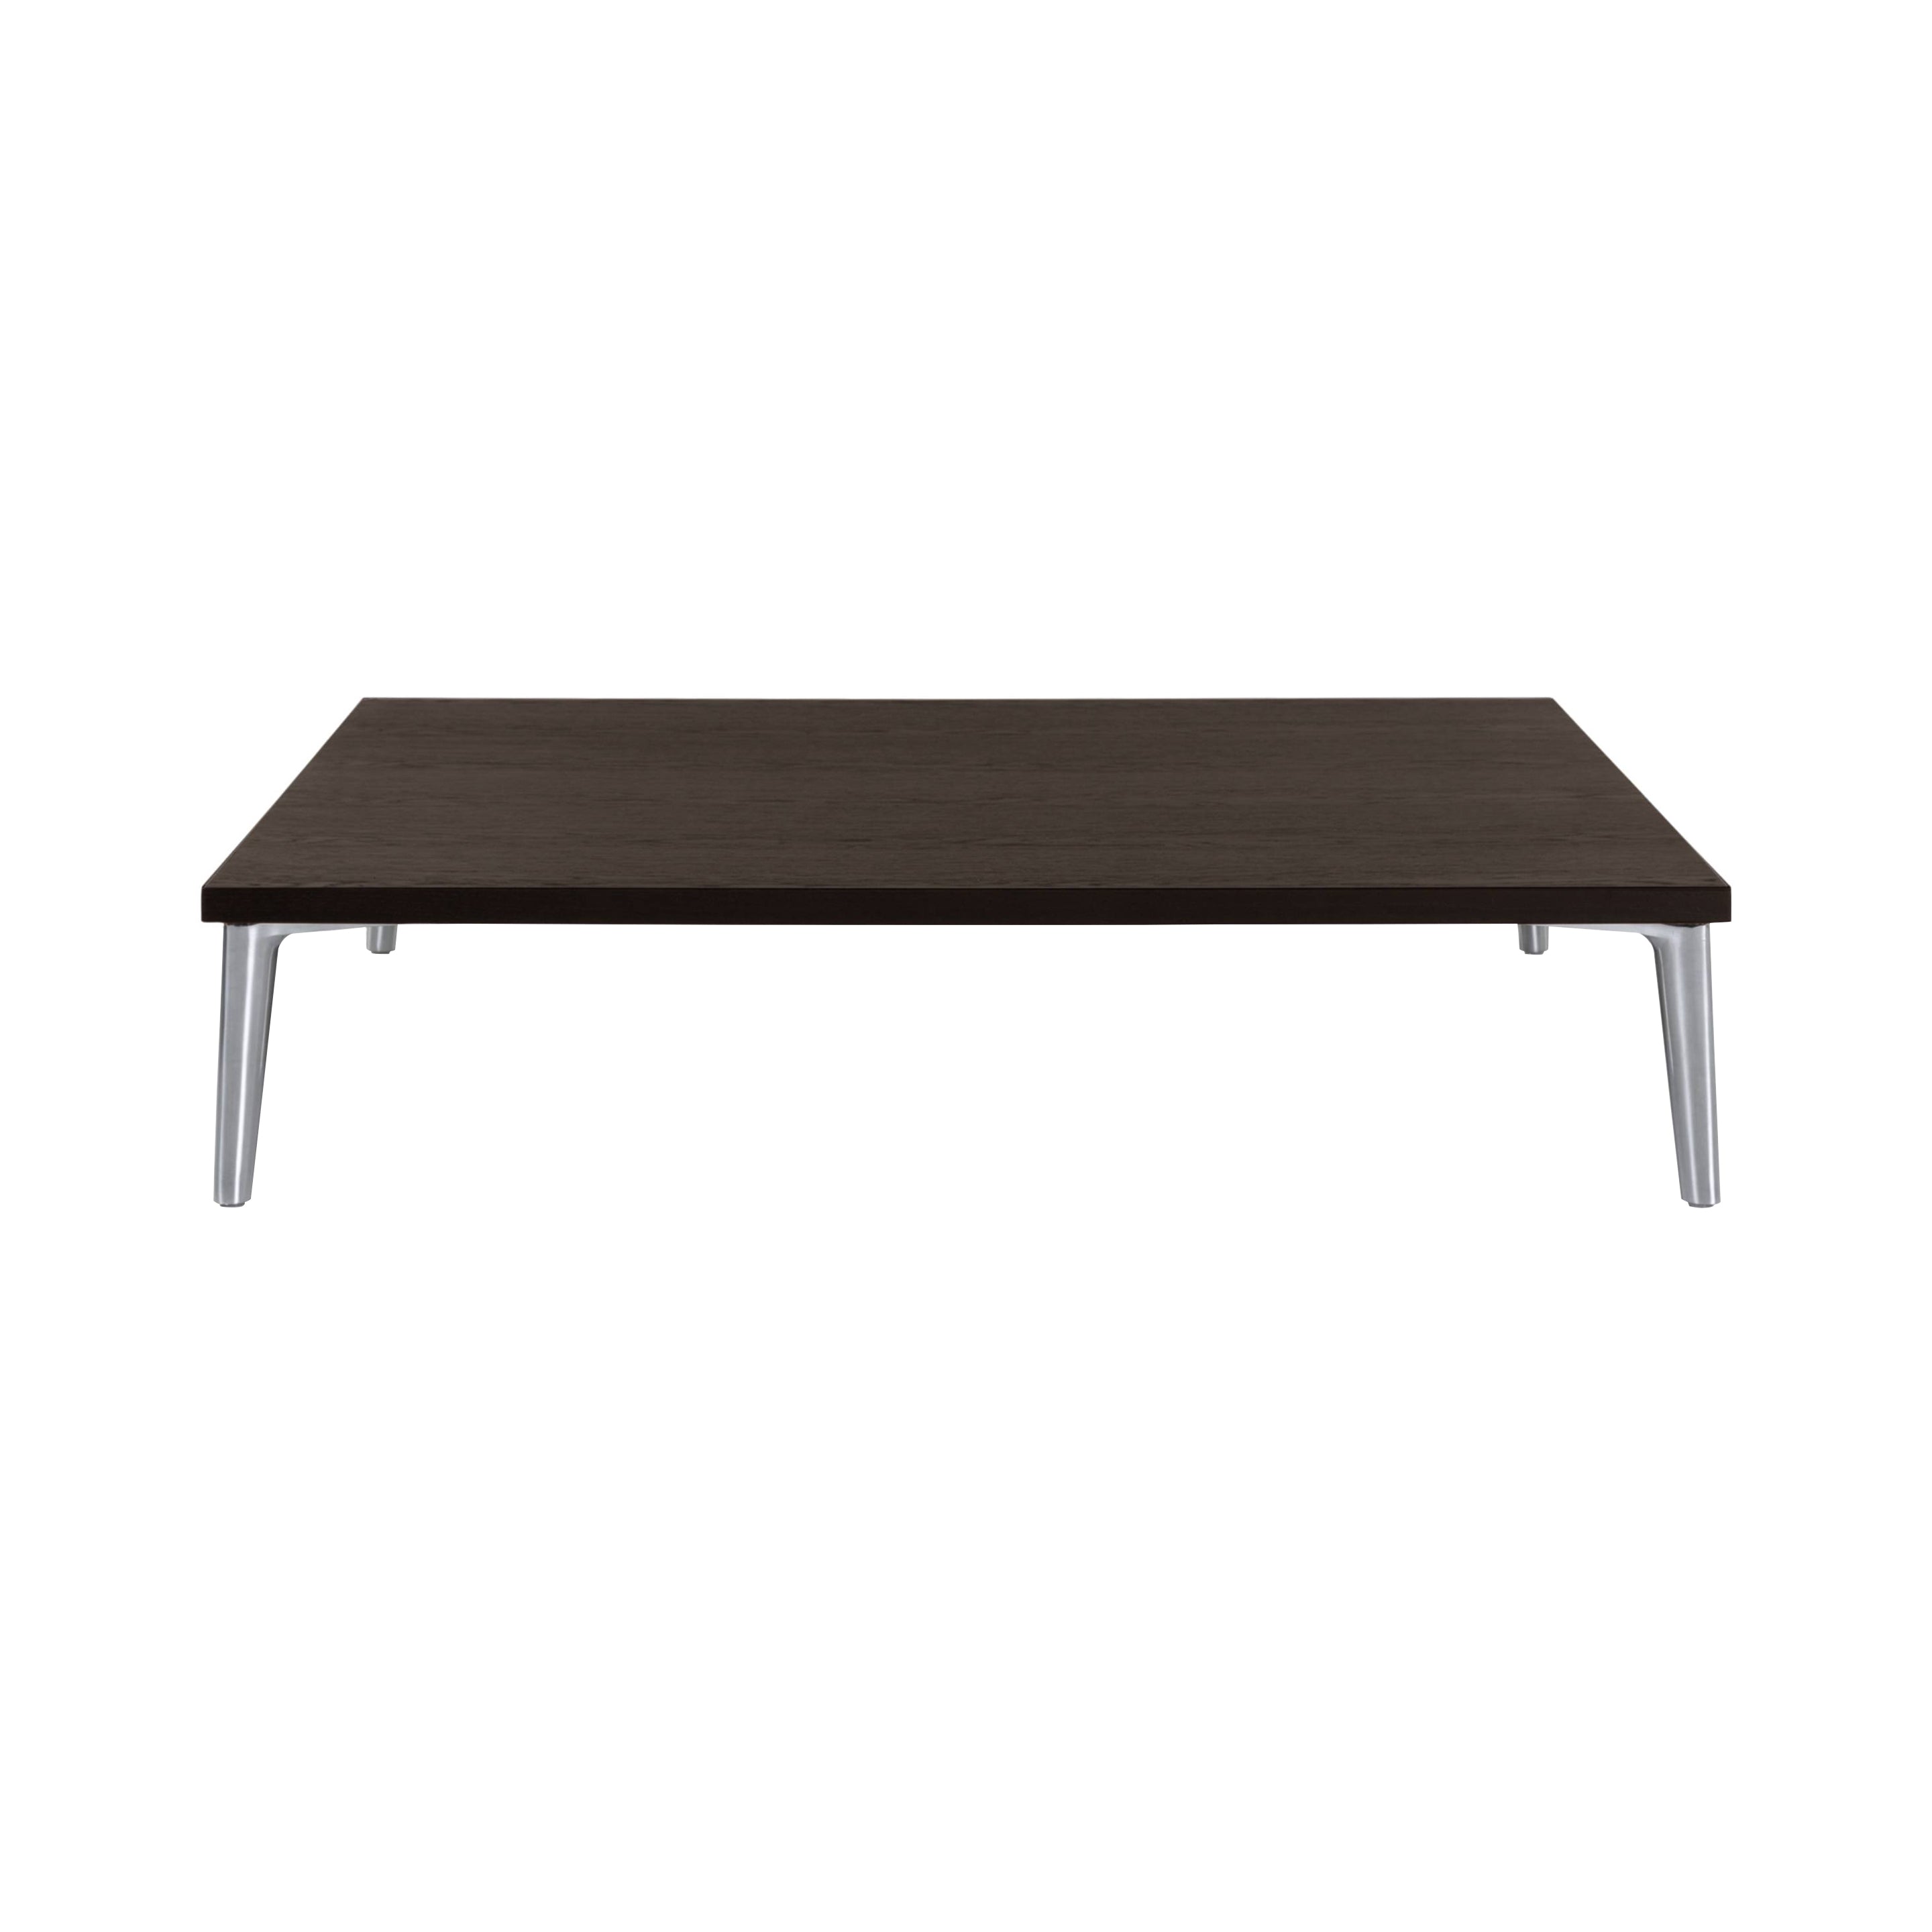 Sofa So Good Table: Grey